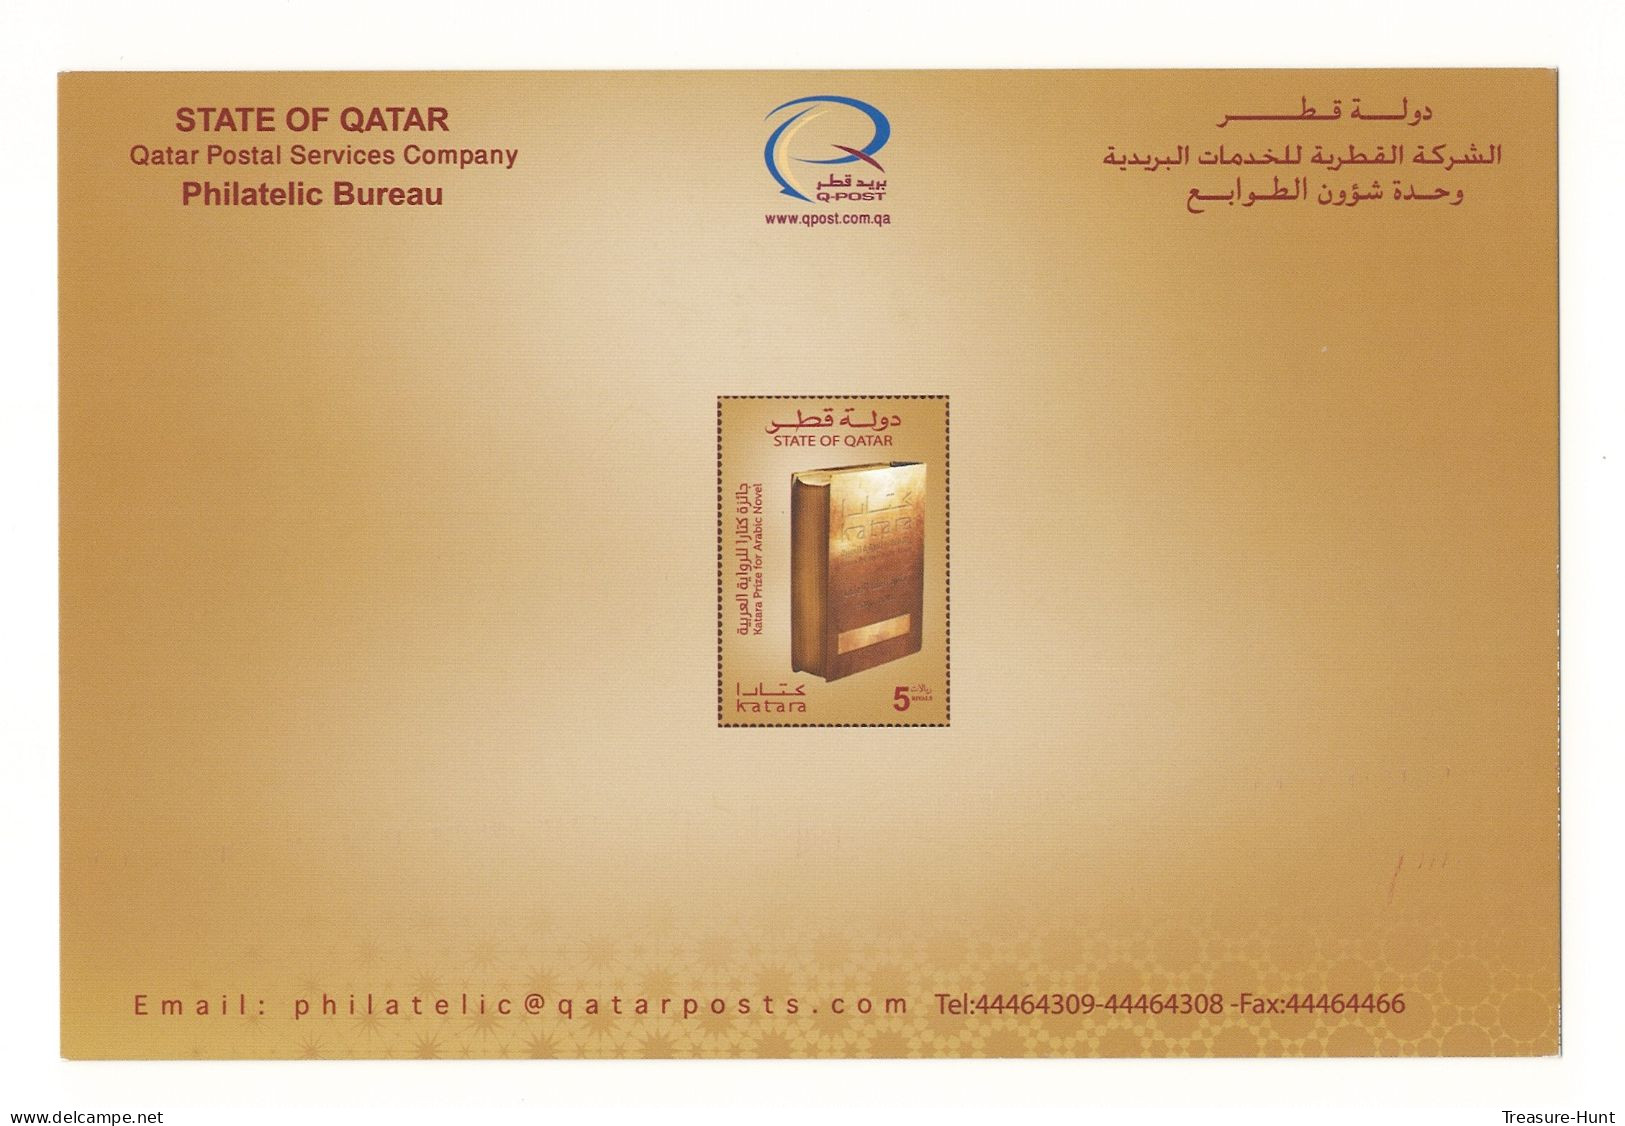 QATAR NEW STAMPS ISSUE BULLETIN / BROCHURE / POSTAL NOTICE - 2015 KATARA ARABIC NOVEL PRIZE, BOOKS LITERATURE READING - Qatar